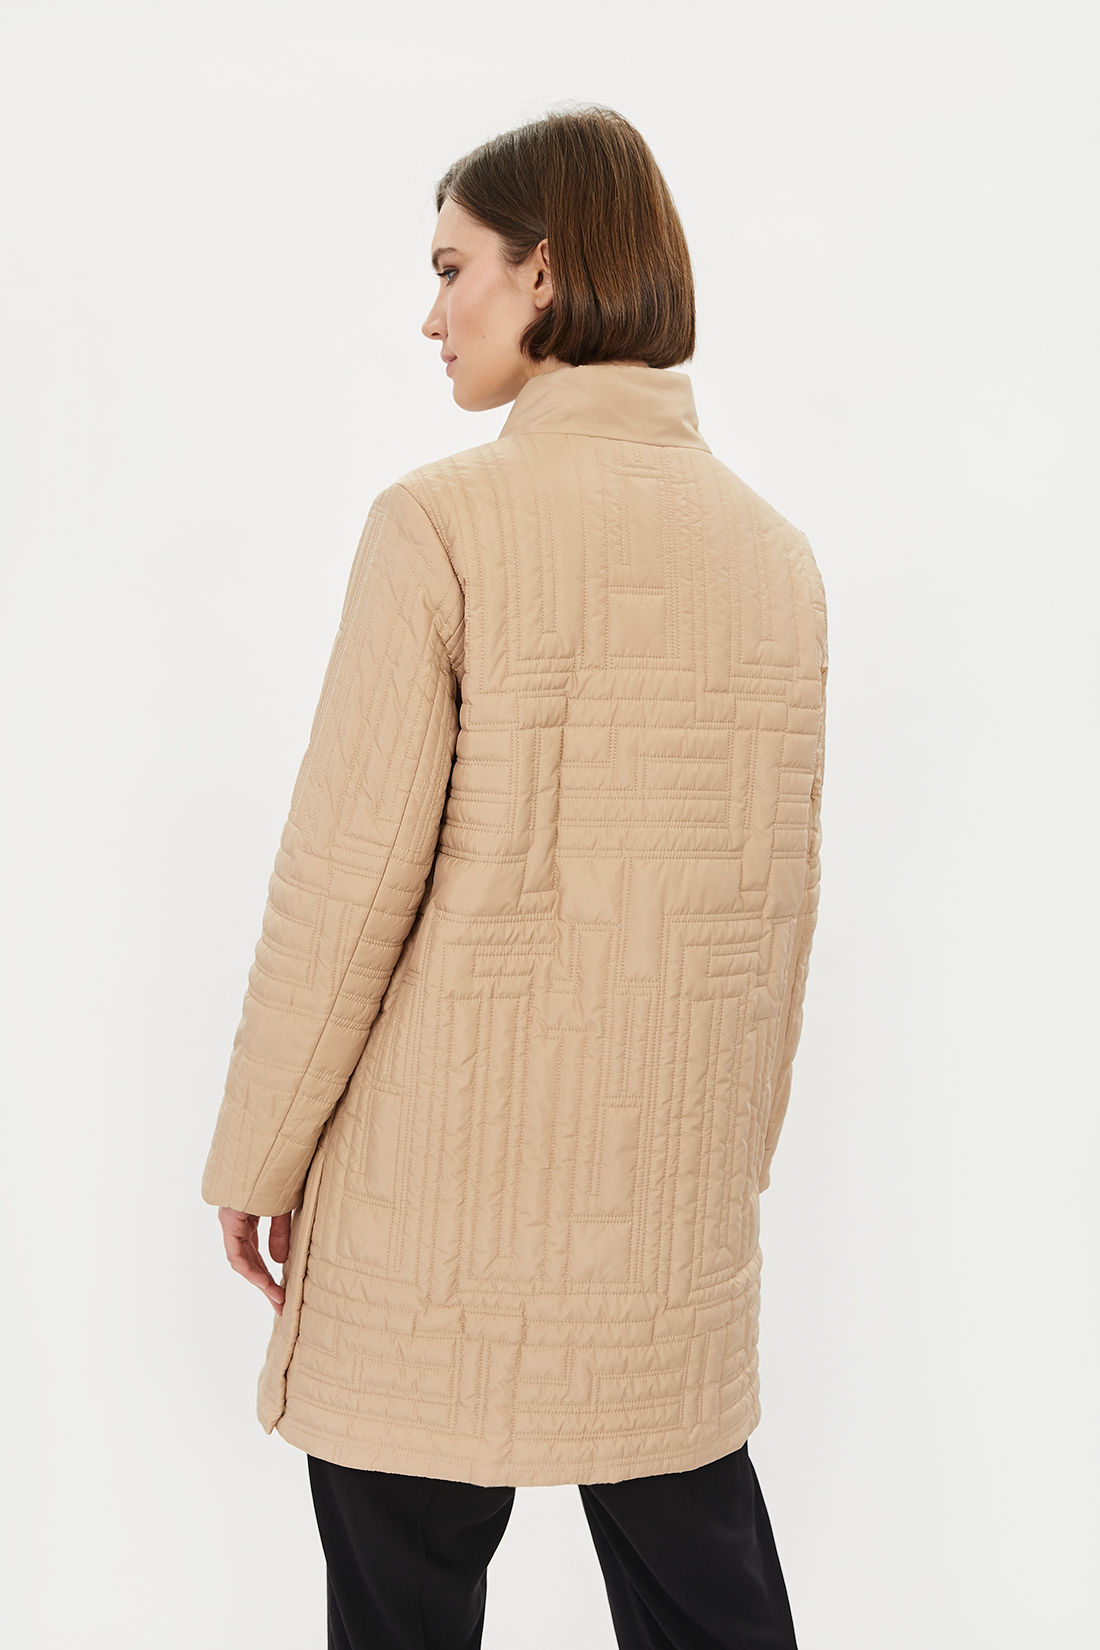 Куртка (арт. baon B031005), размер XS, цвет бежевый Куртка (арт. baon B031005) - фото 2